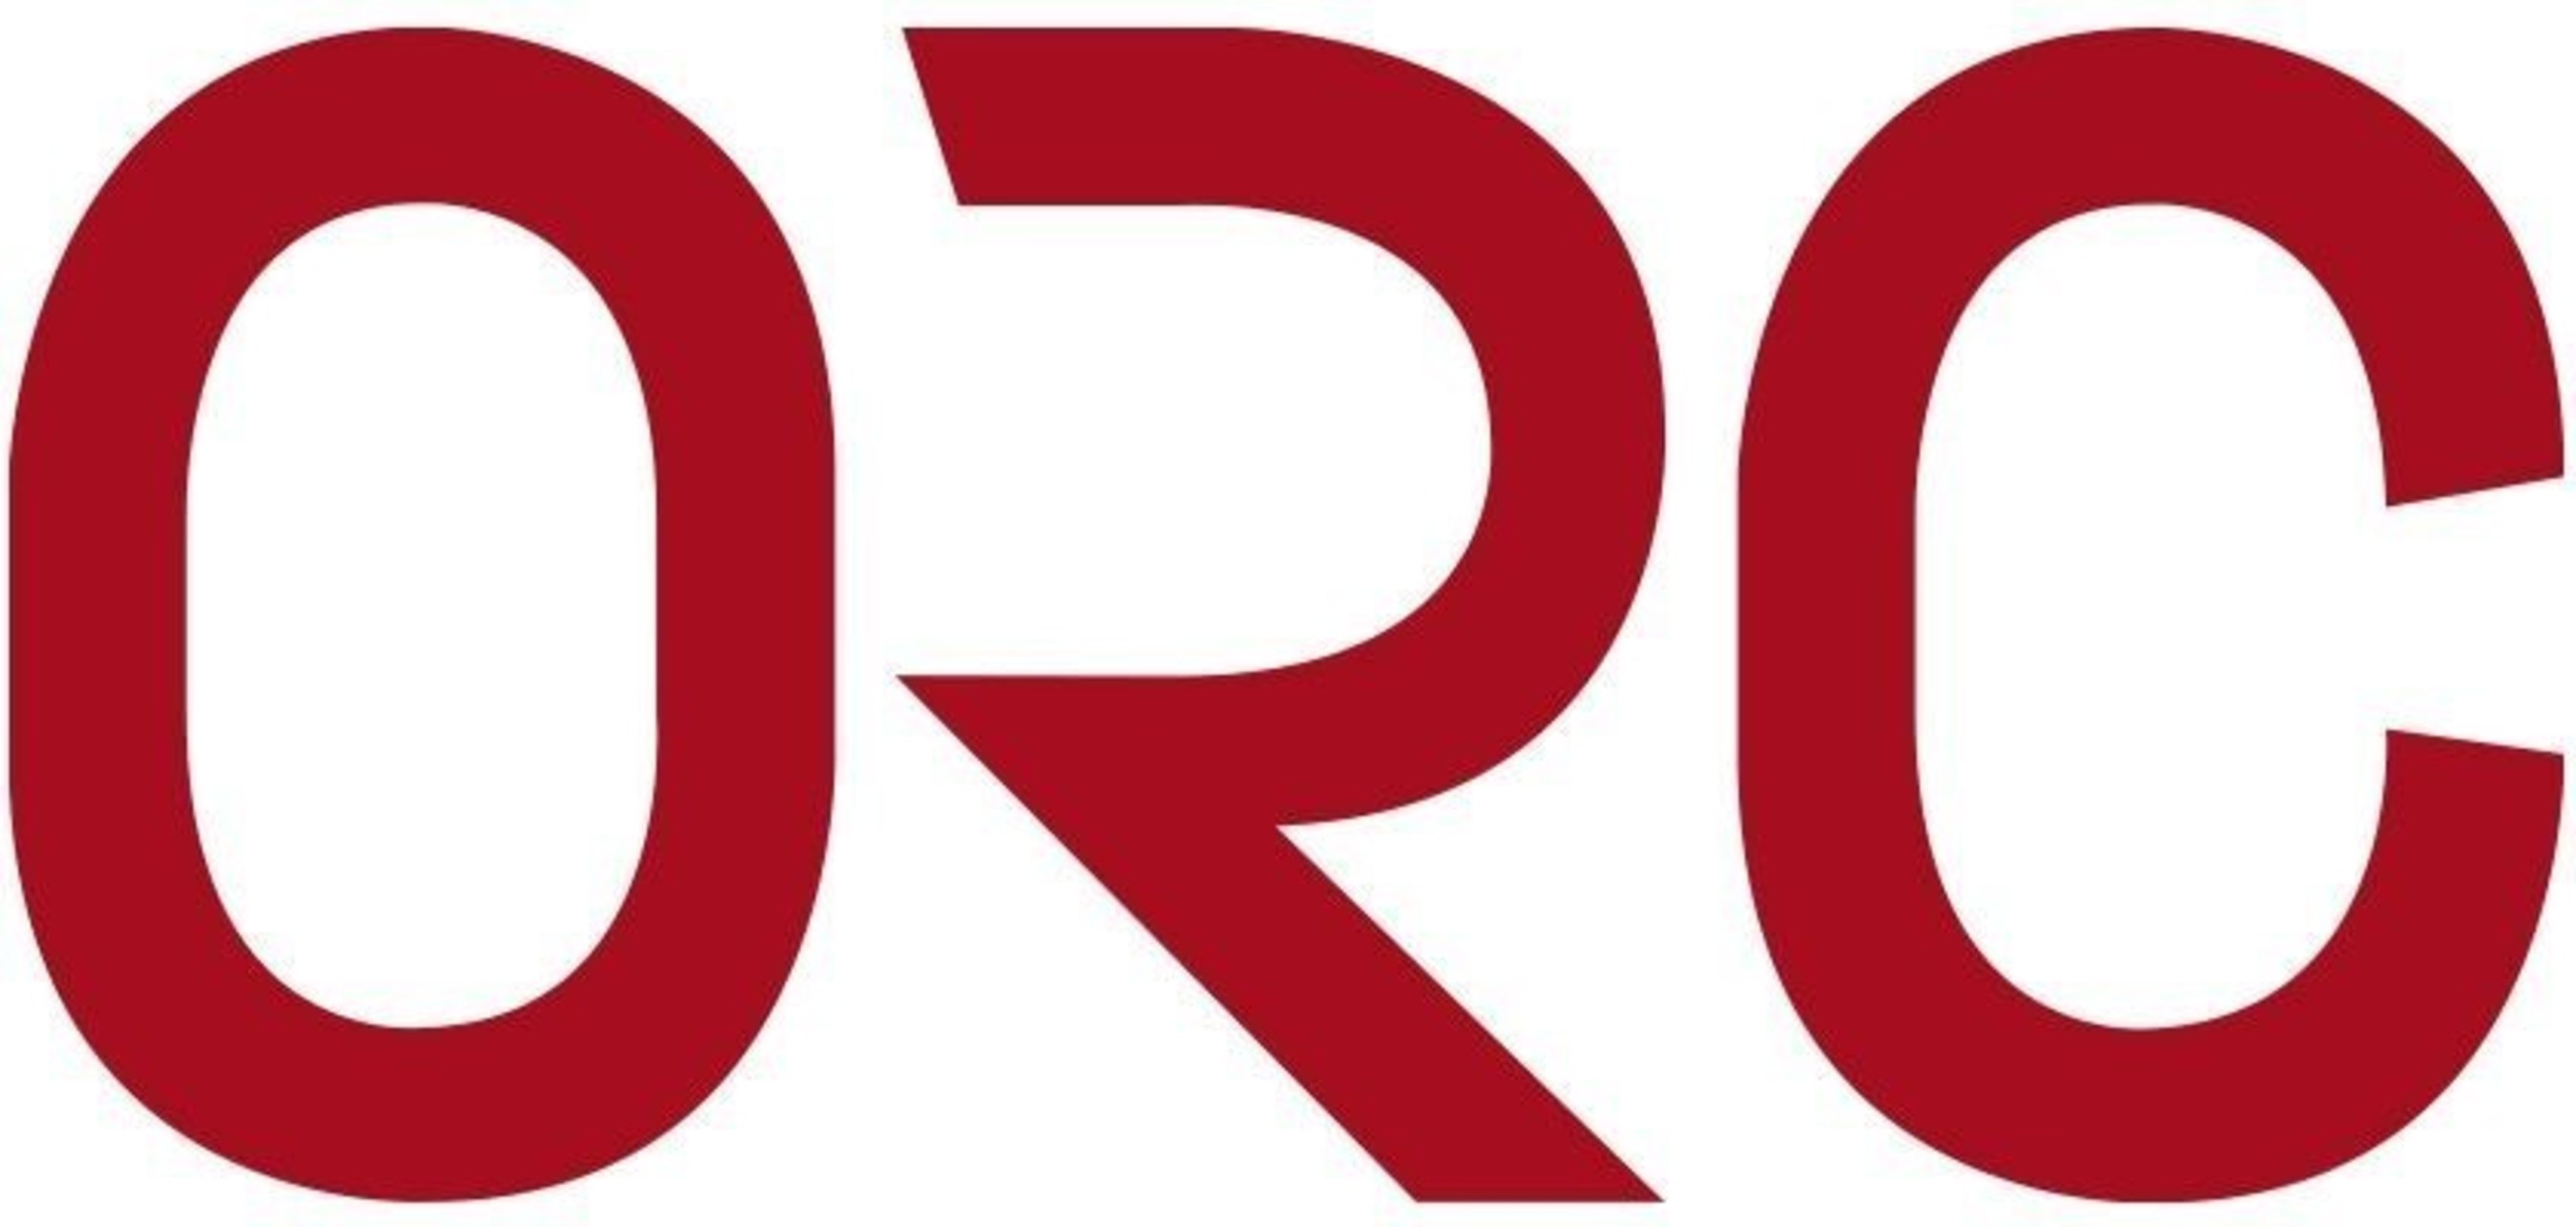 ORC Group AB Logo (PRNewsFoto/ORC Group AB) (PRNewsFoto/ORC Group AB)